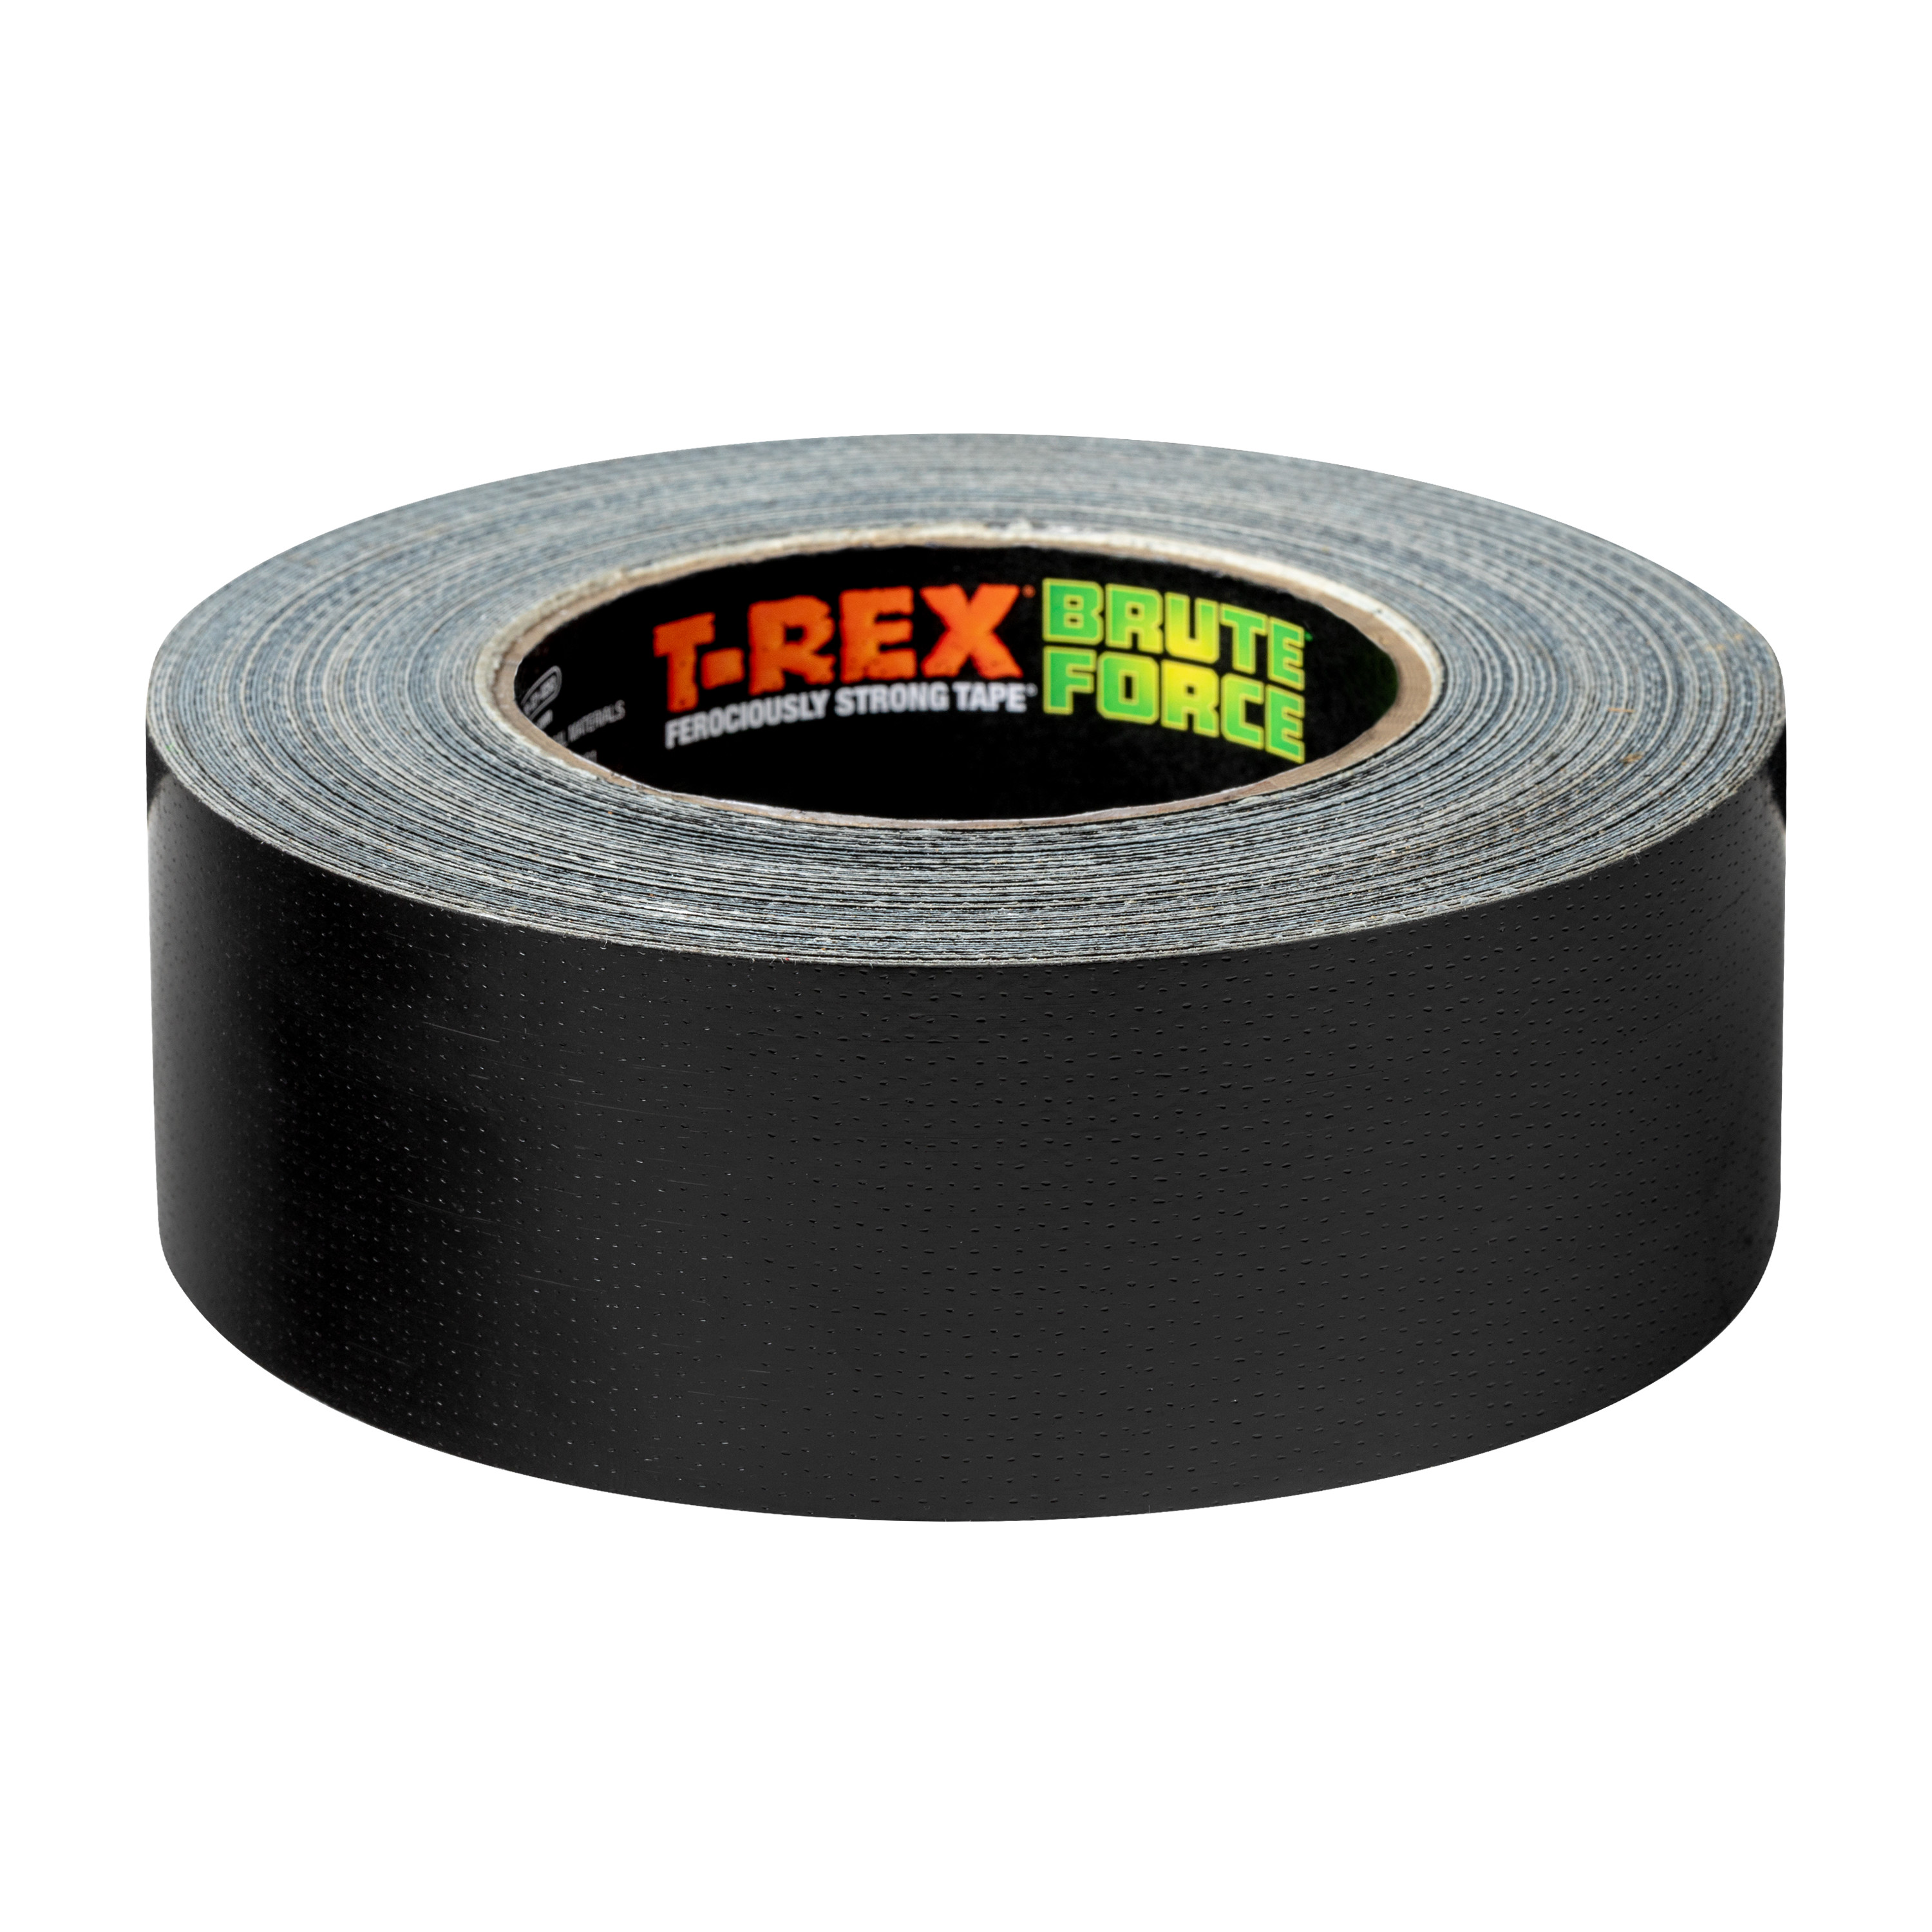 T-rex Brute Force Black Duct Tape Bonus Length, 1.88 In. X 25 Yd. - image 5 of 7